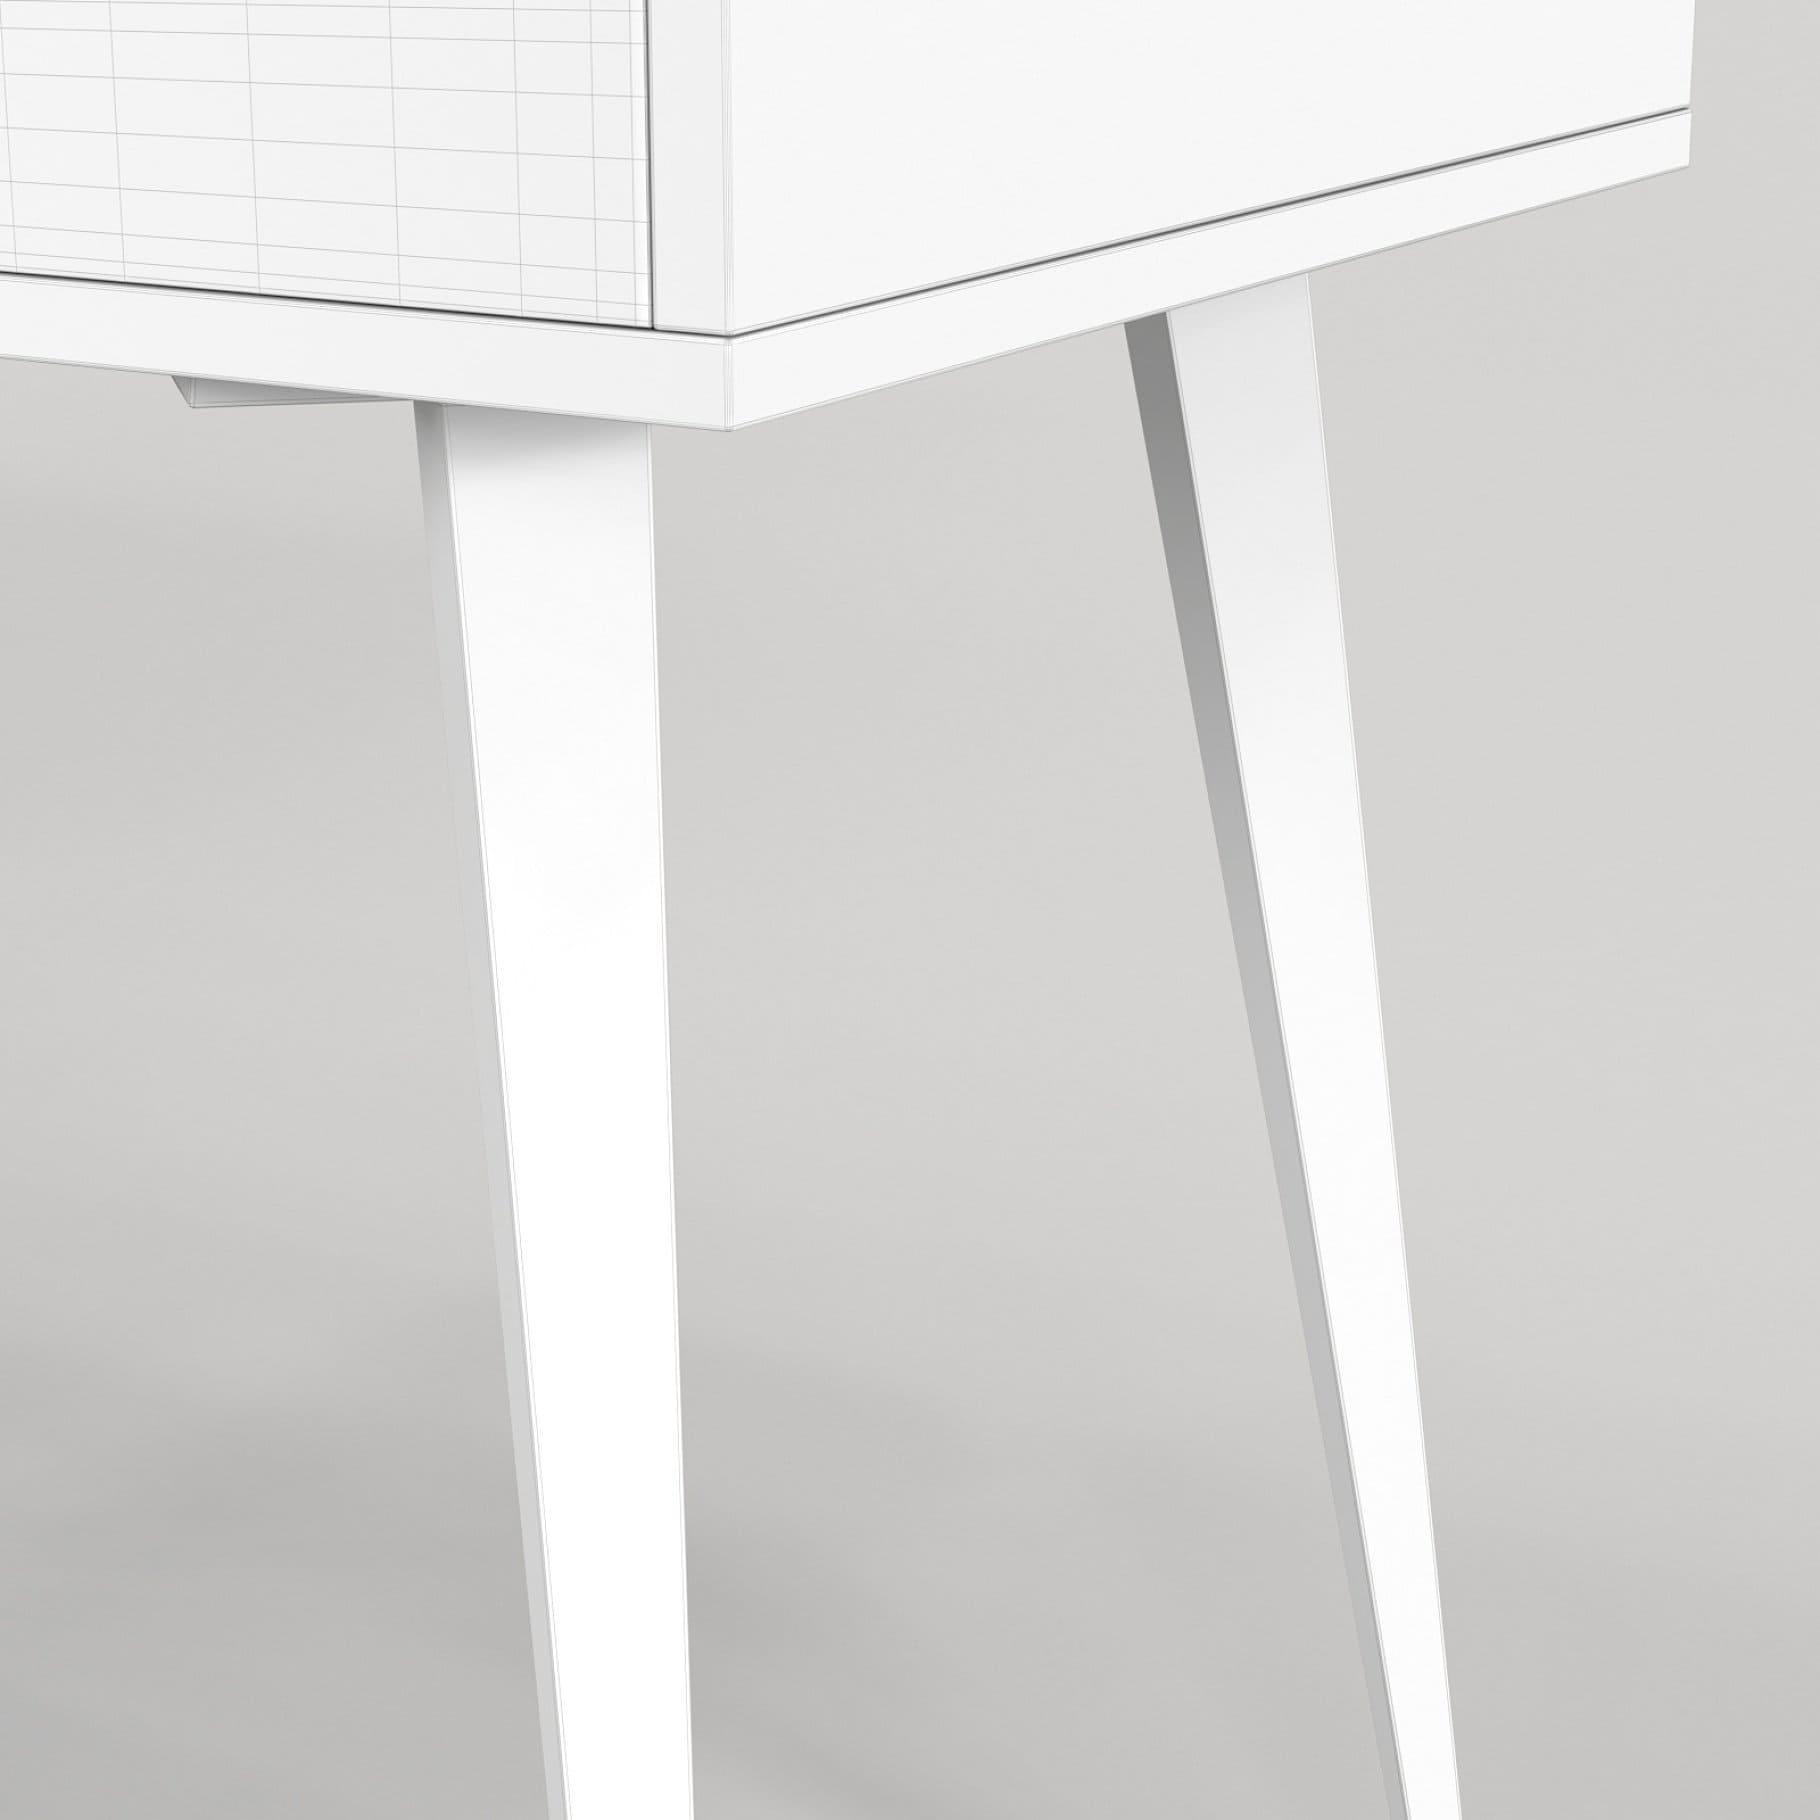 Photo of the lower corner of the white wooden Scandinavian desk with shelves model 04.